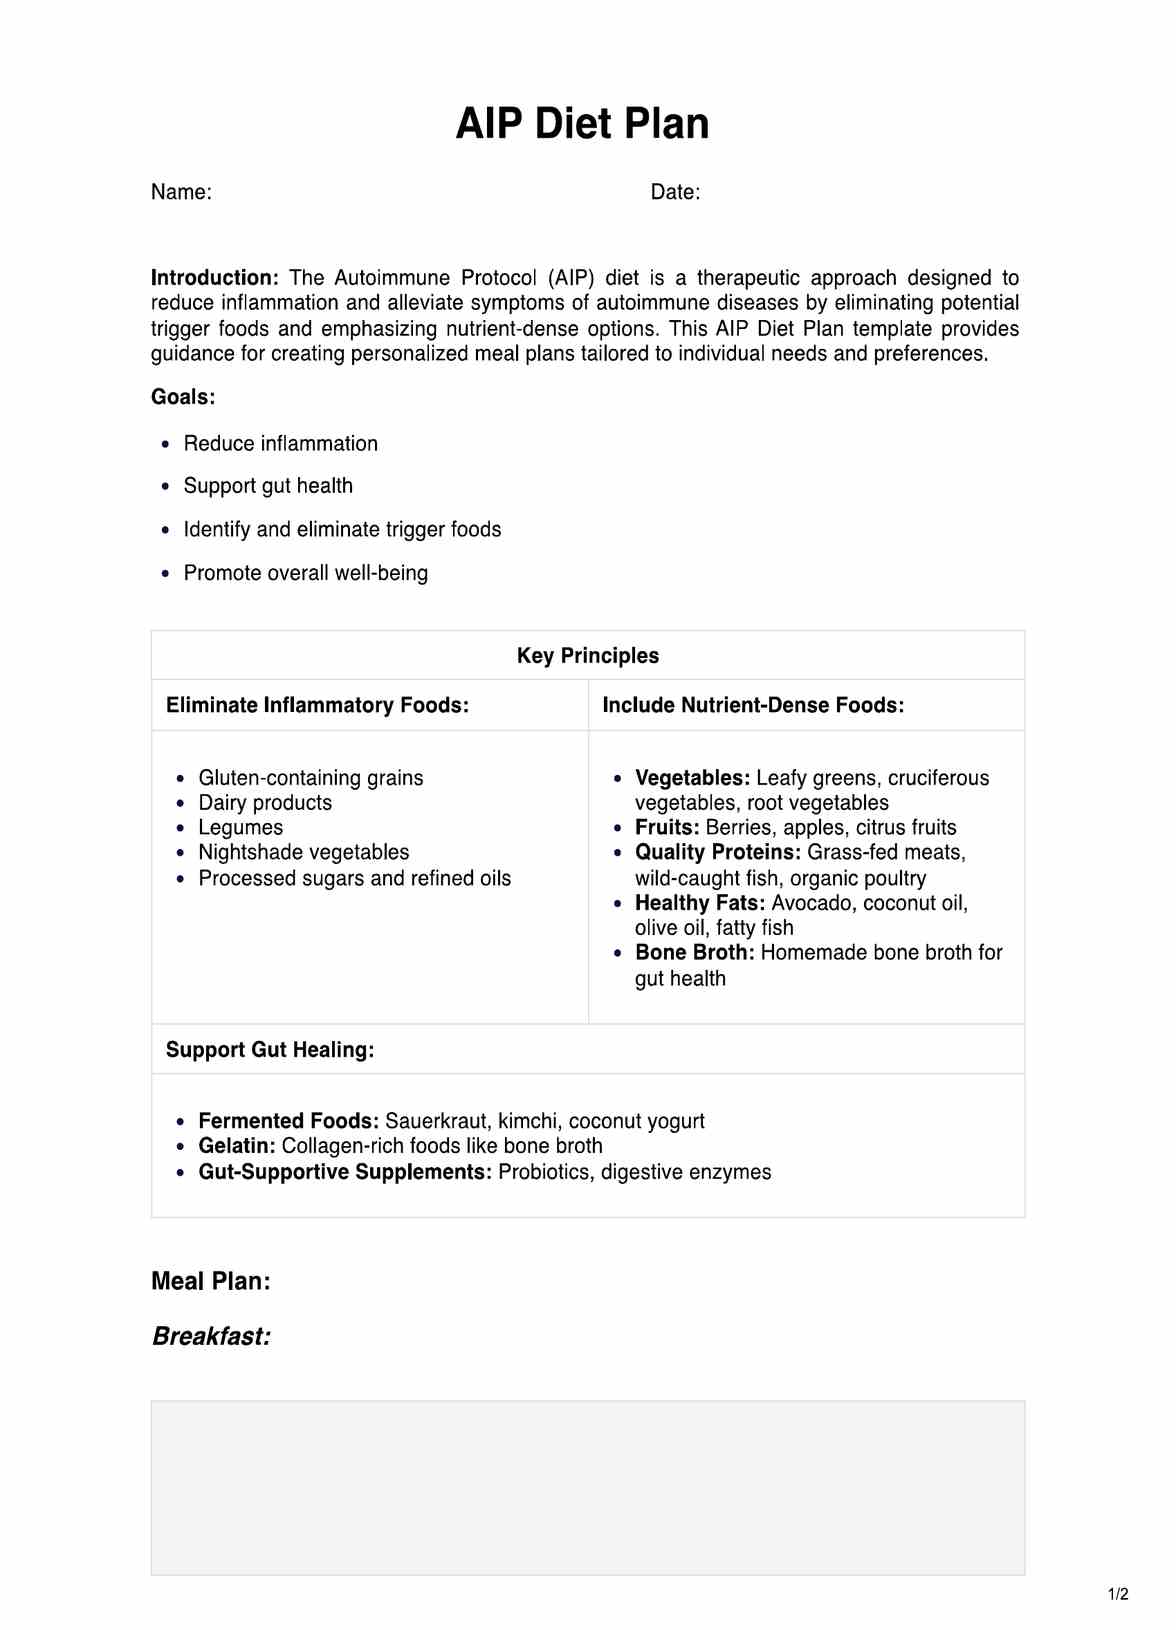 AIP Diet Plan PDF Example